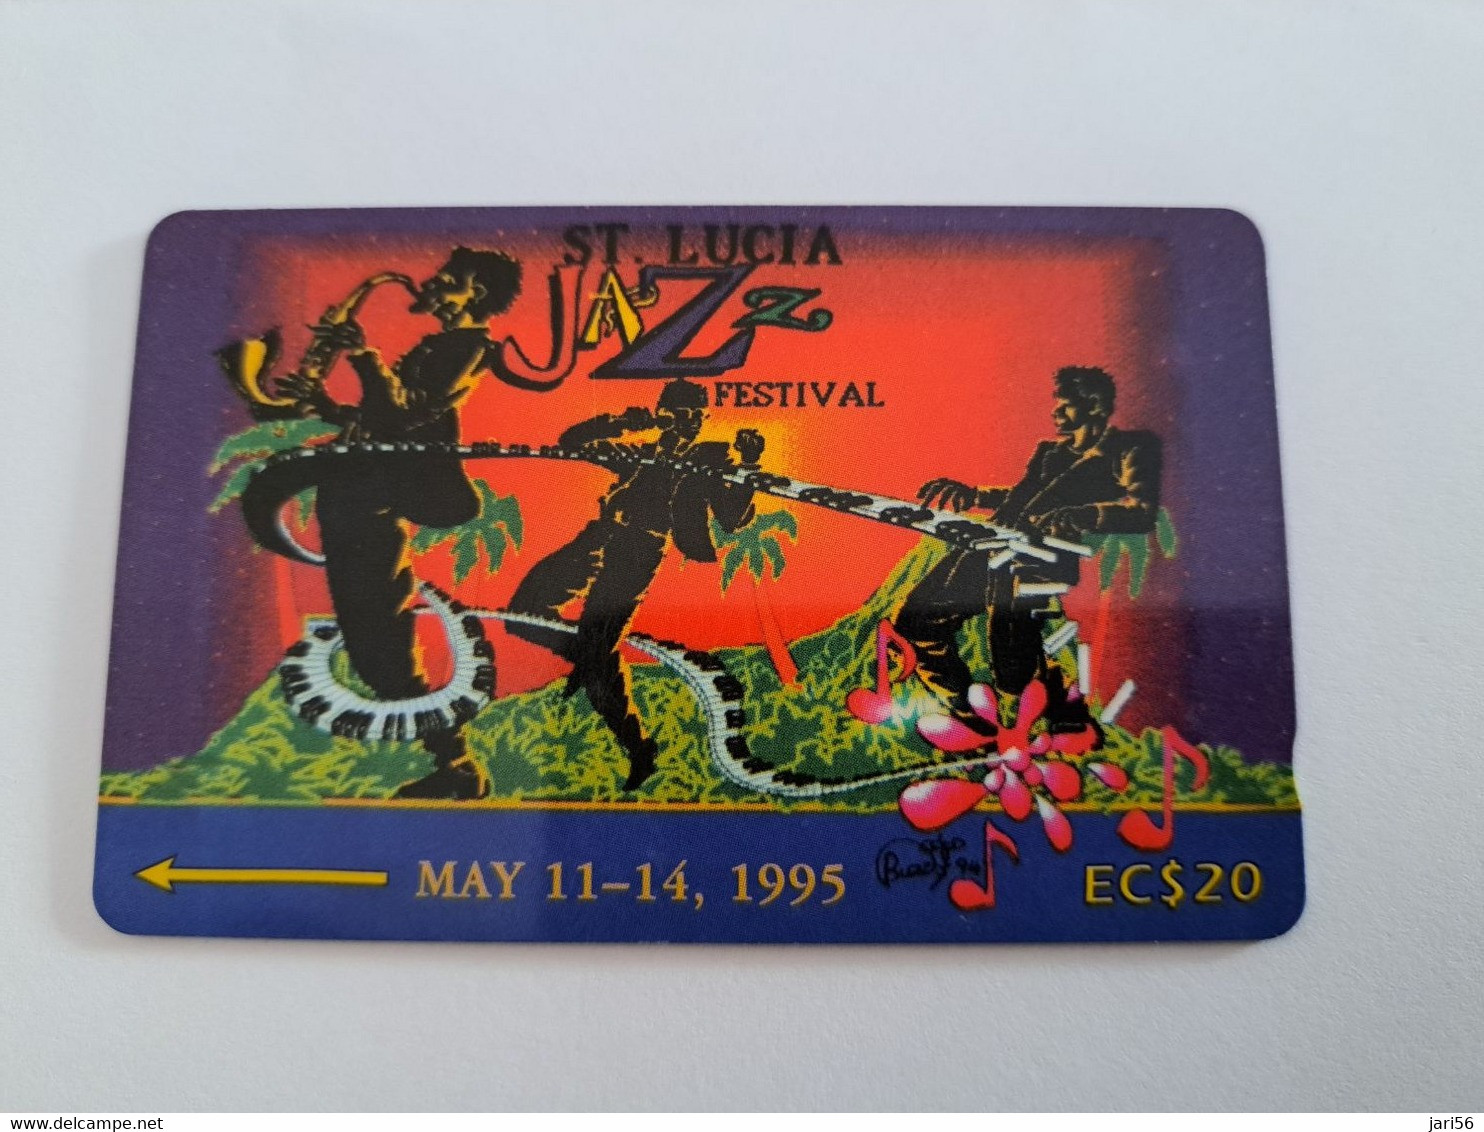 ST LUCIA    $ 20   CABLE & WIRELESS  STL-19A  19CSLA      JAZZ FESTIVAL 1995  Fine Used Card ** 10880** - Saint Lucia